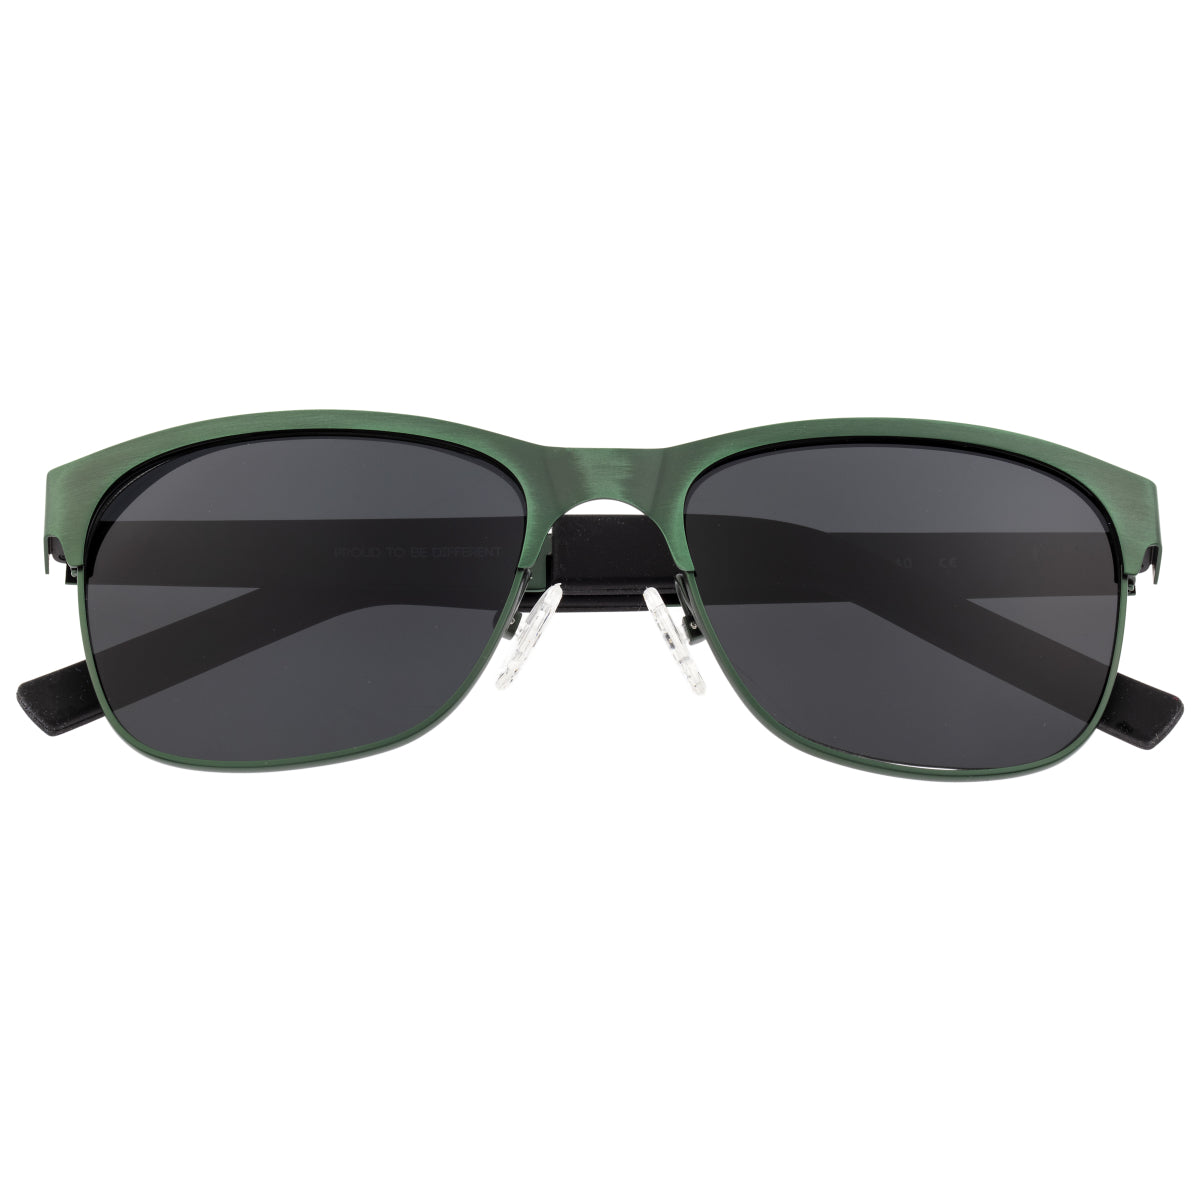 Breed Hypnos Titanium Polarized Sunglasses - Green/Black - BSG057GN